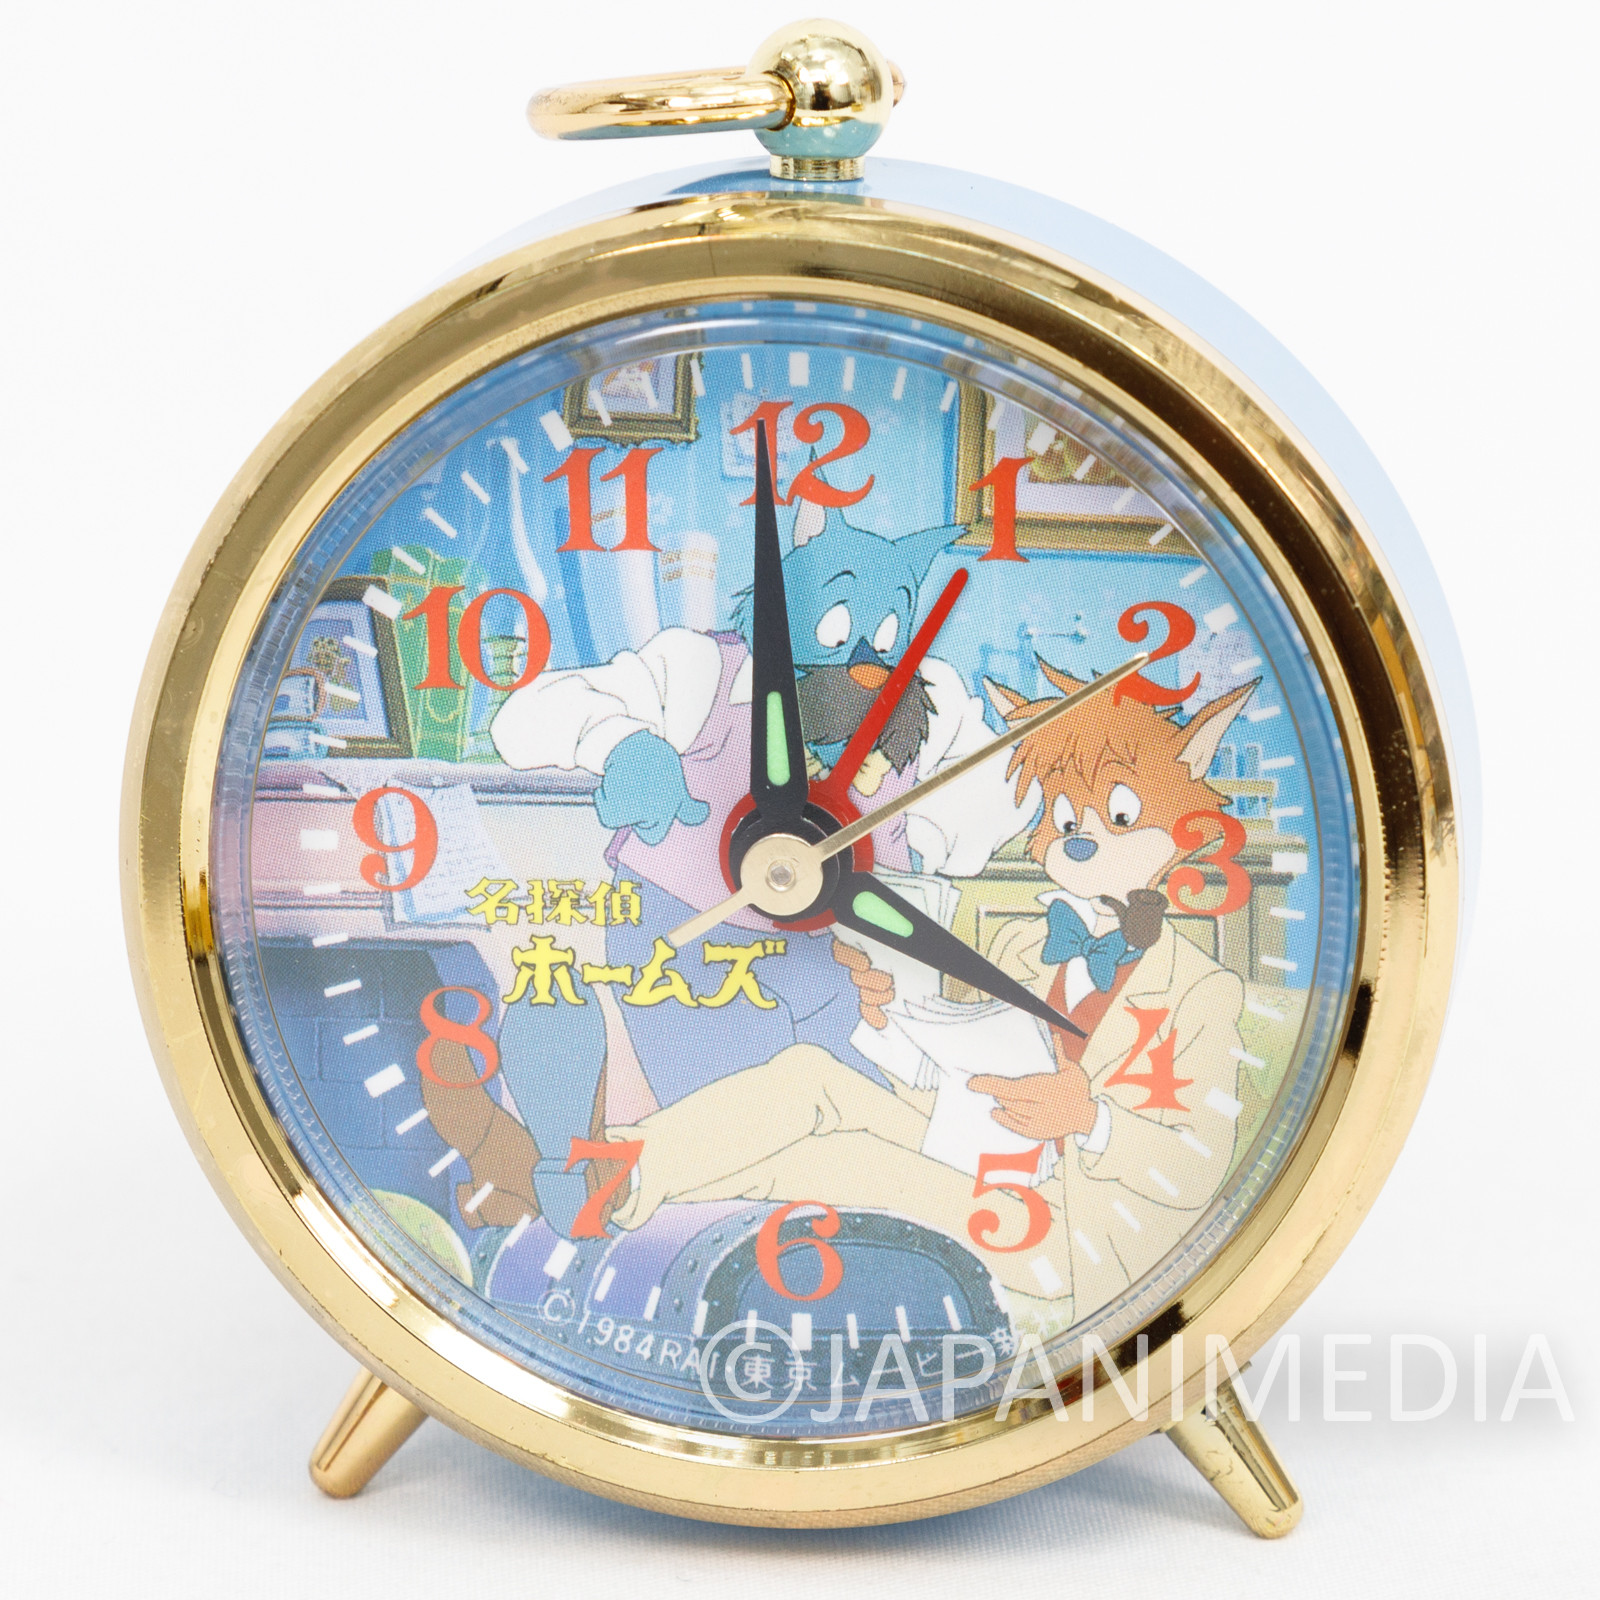 RARE! The Detective Holmes Sherlock Mini Alarm Clock JAPAN ANIME